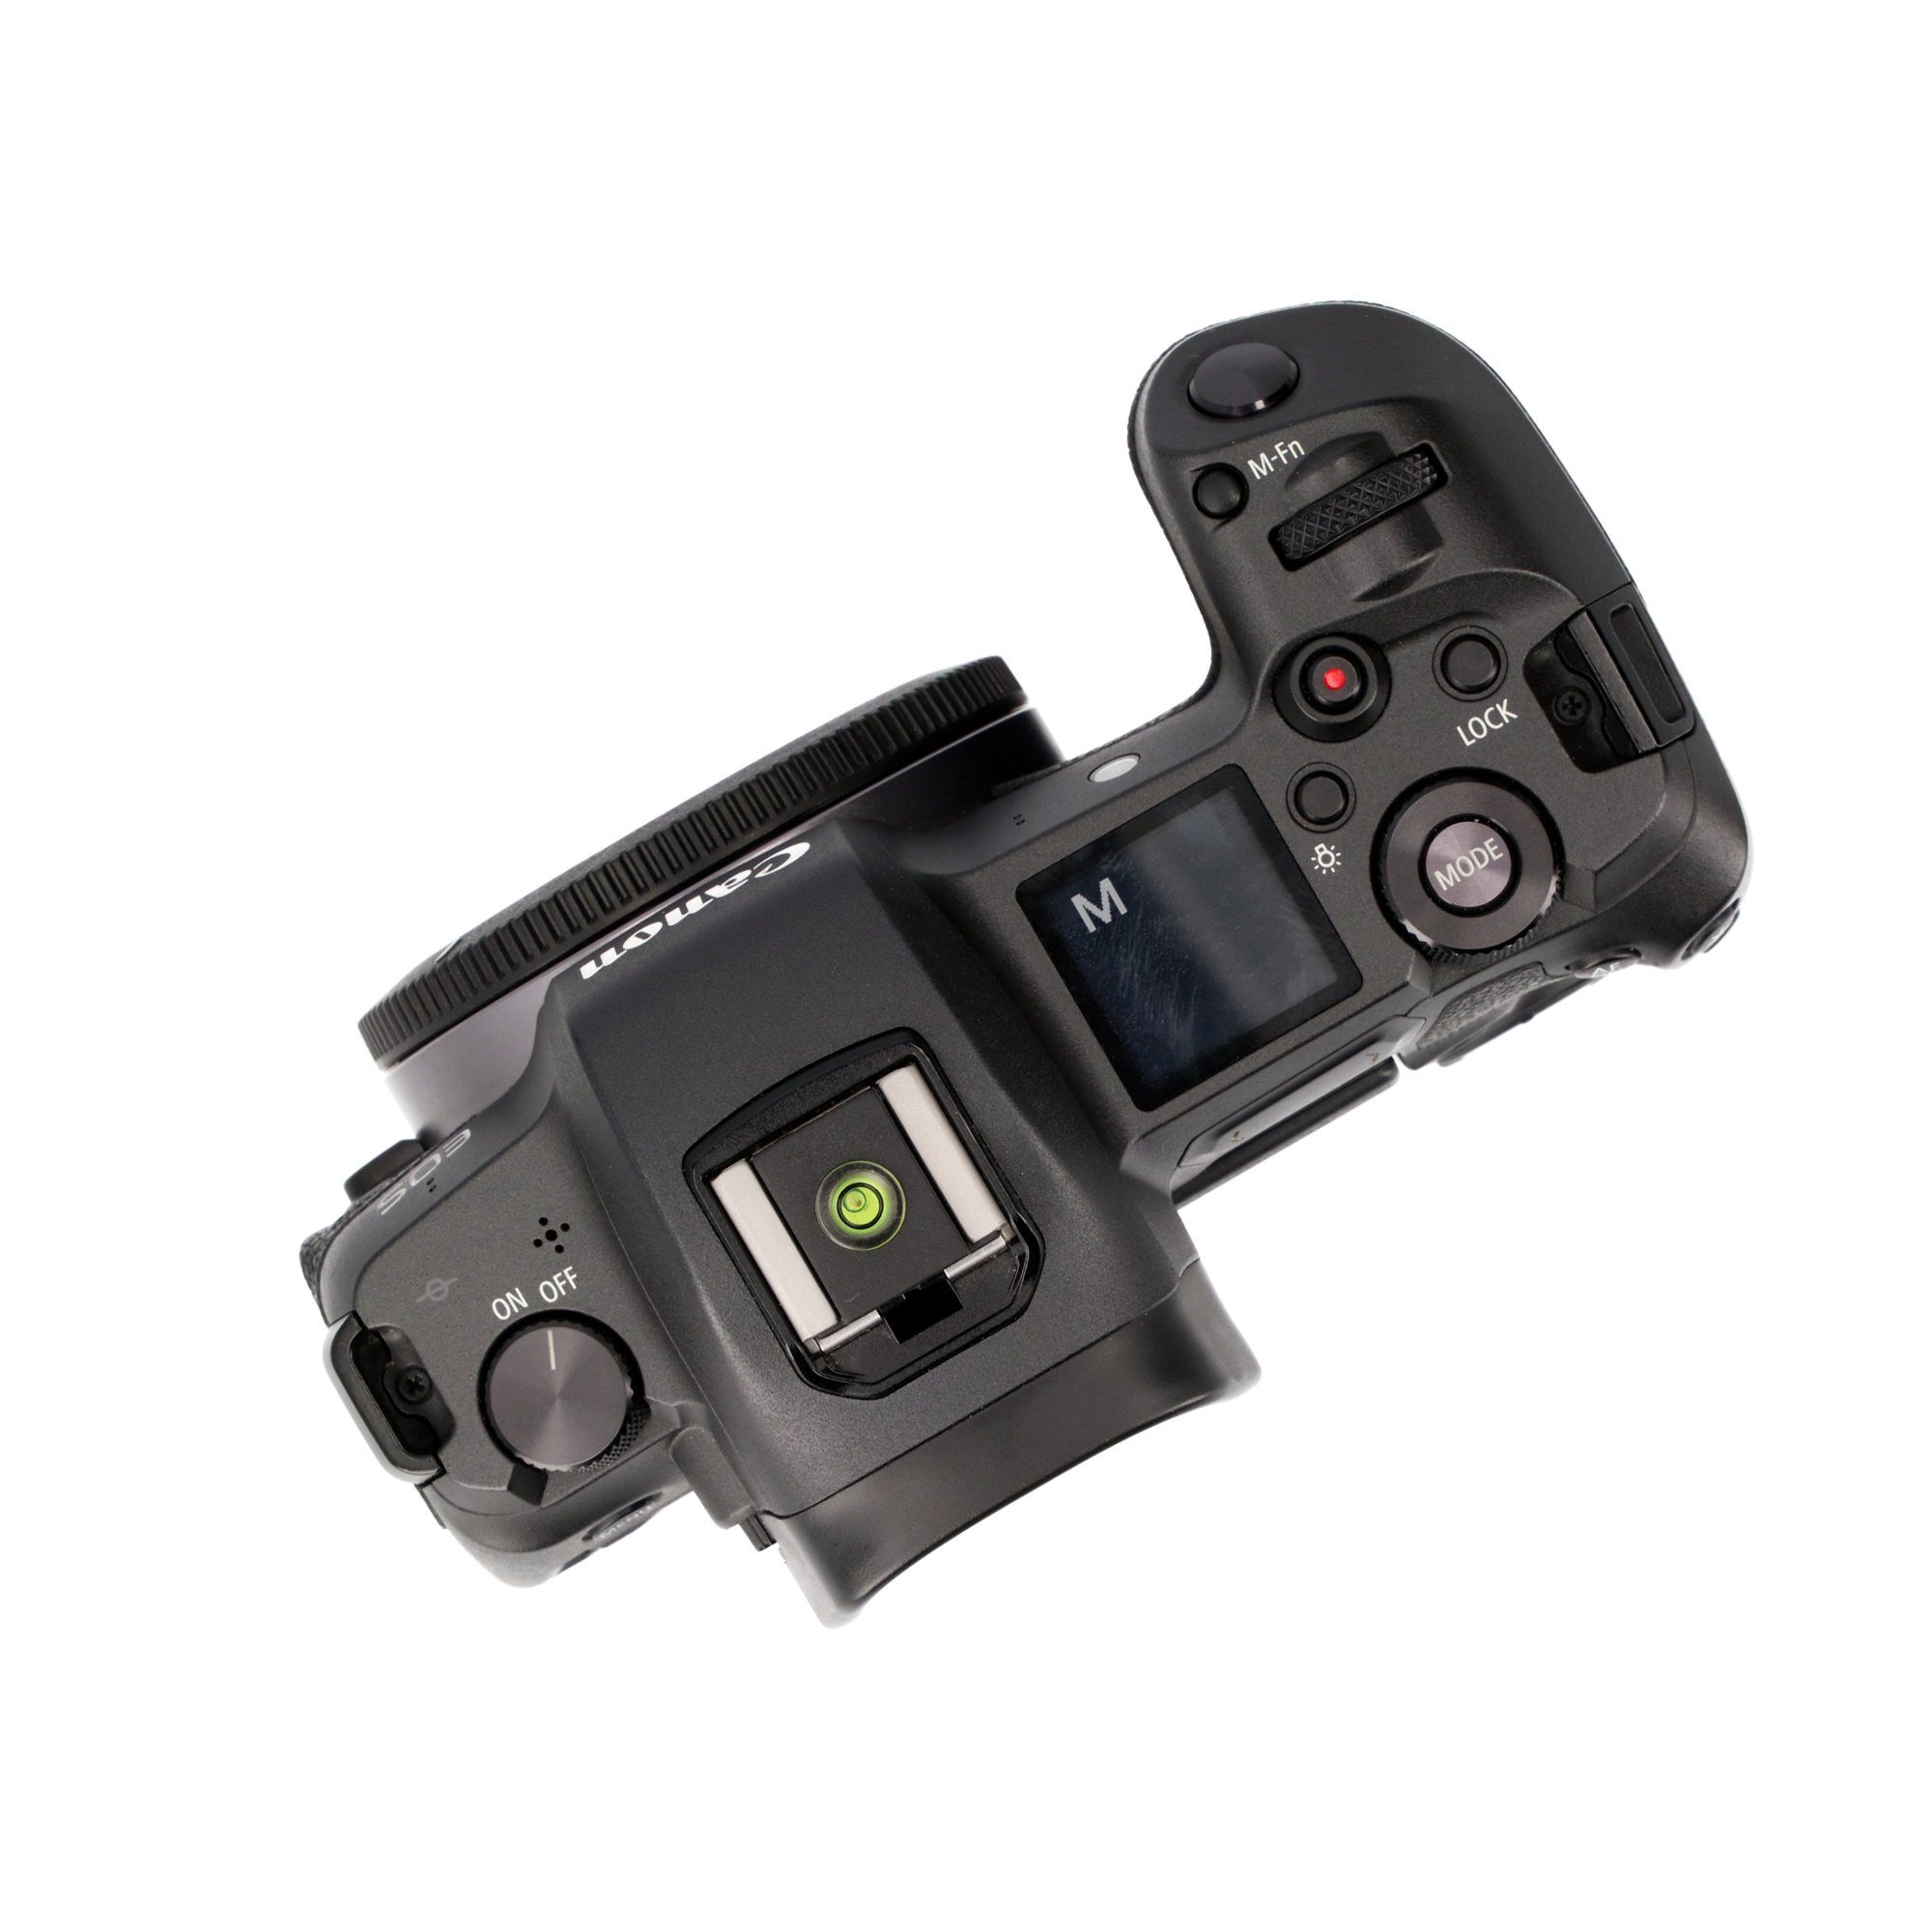 Standard-Blitzschuh Wasserwaage S5 ayex Dosenlibelle Systemkamera + Blitzschuhabdeckung